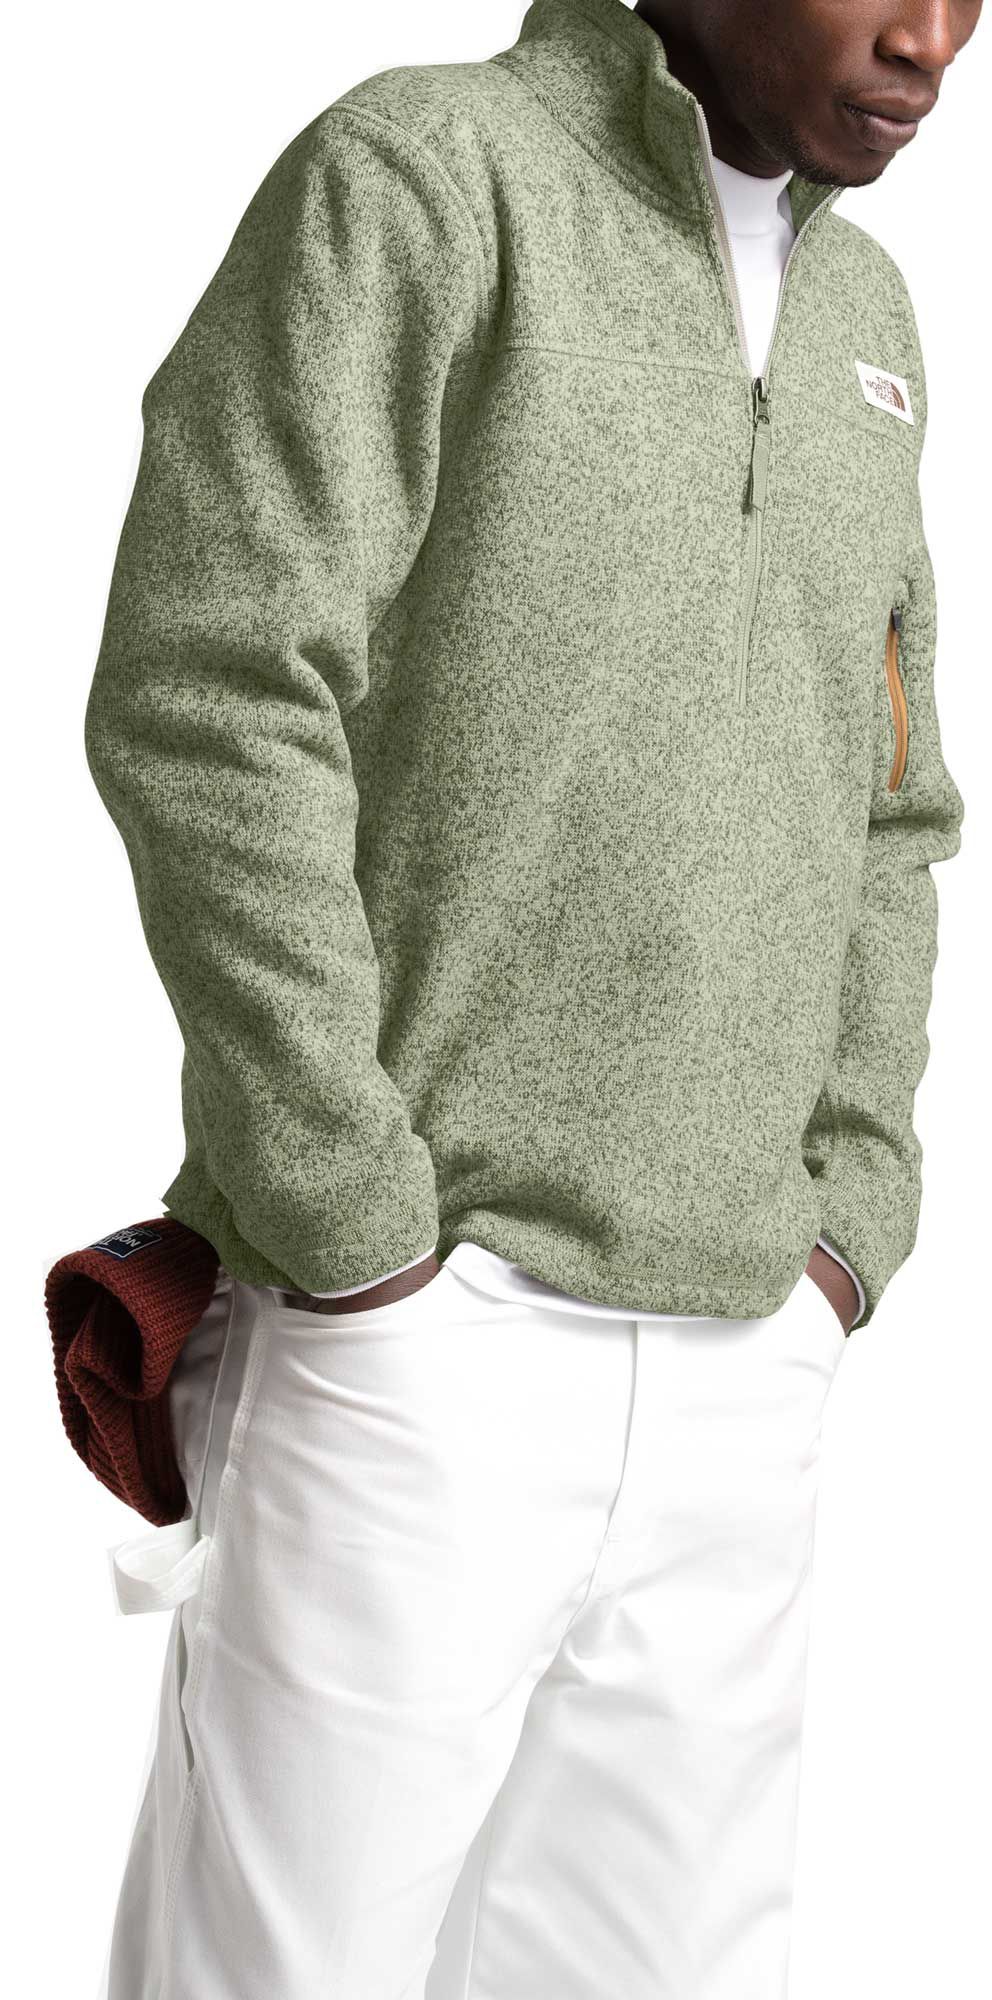 north face men's fleece pullover